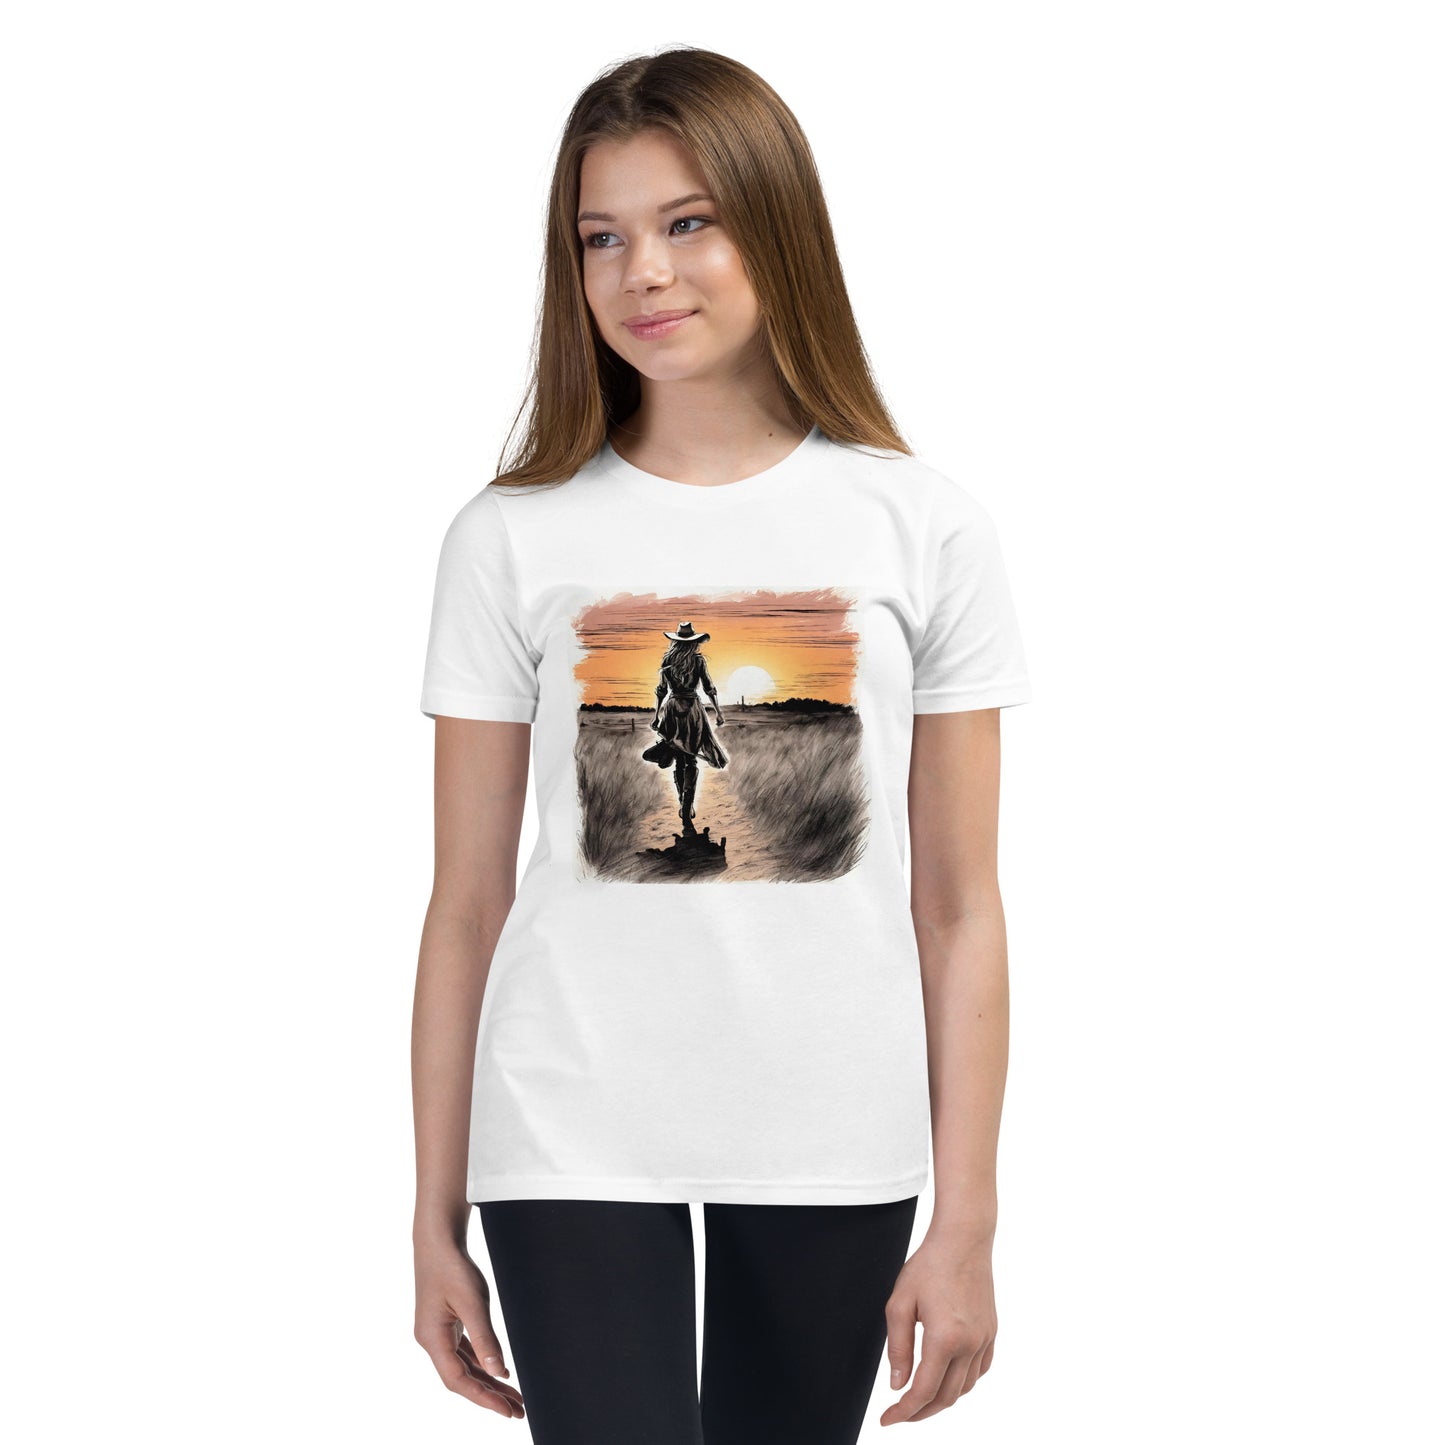 Lana - Youth Short Sleeve T-Shirt